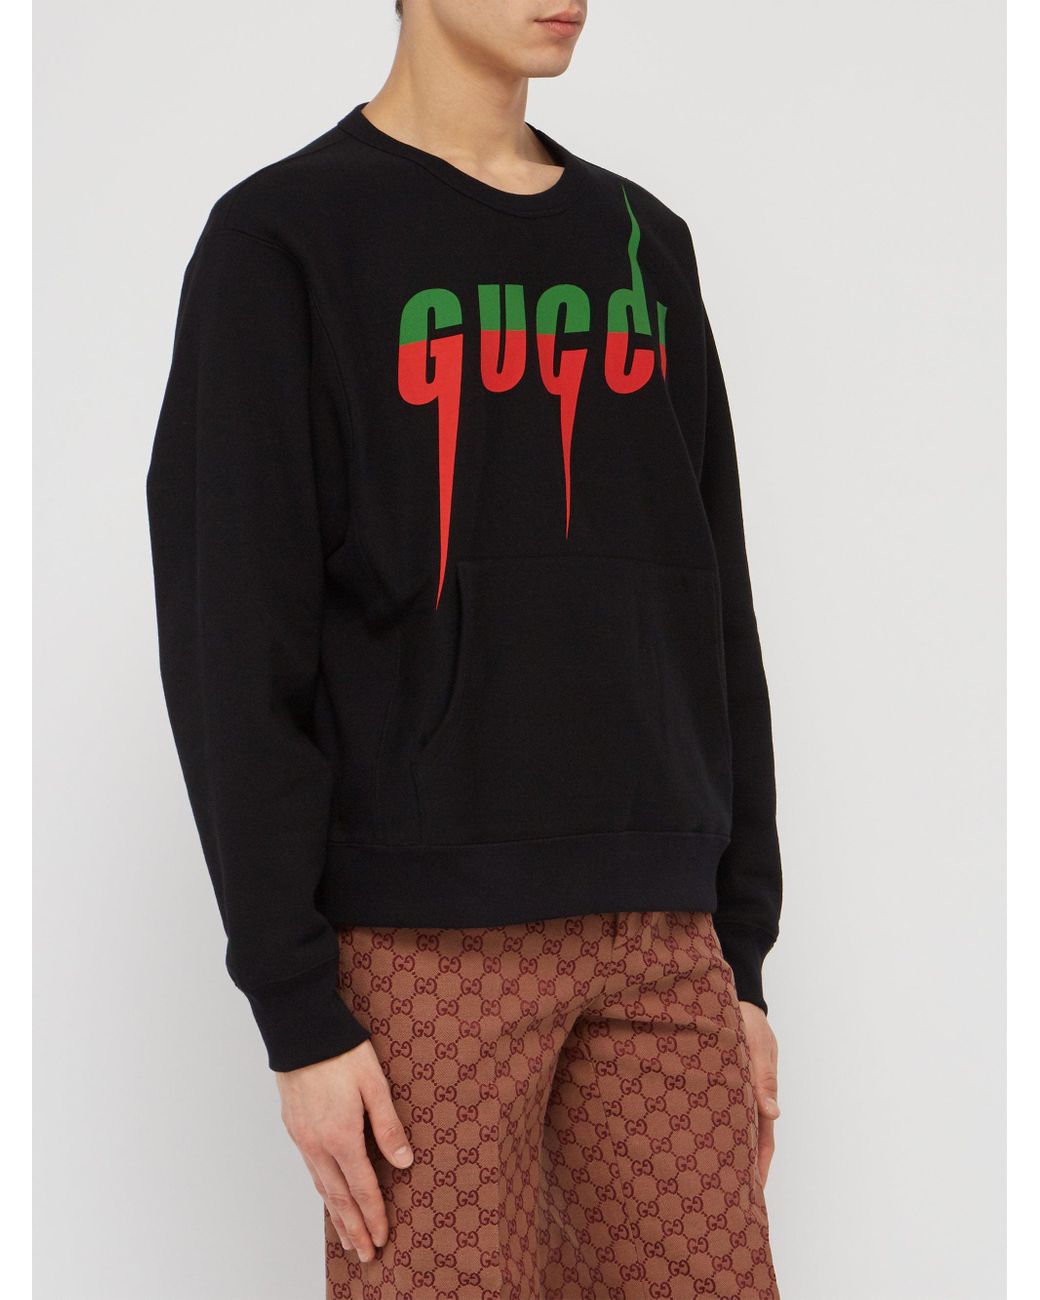 Gucci Blade Cotton Sweatshirt in Black for Men | Lyst Australia